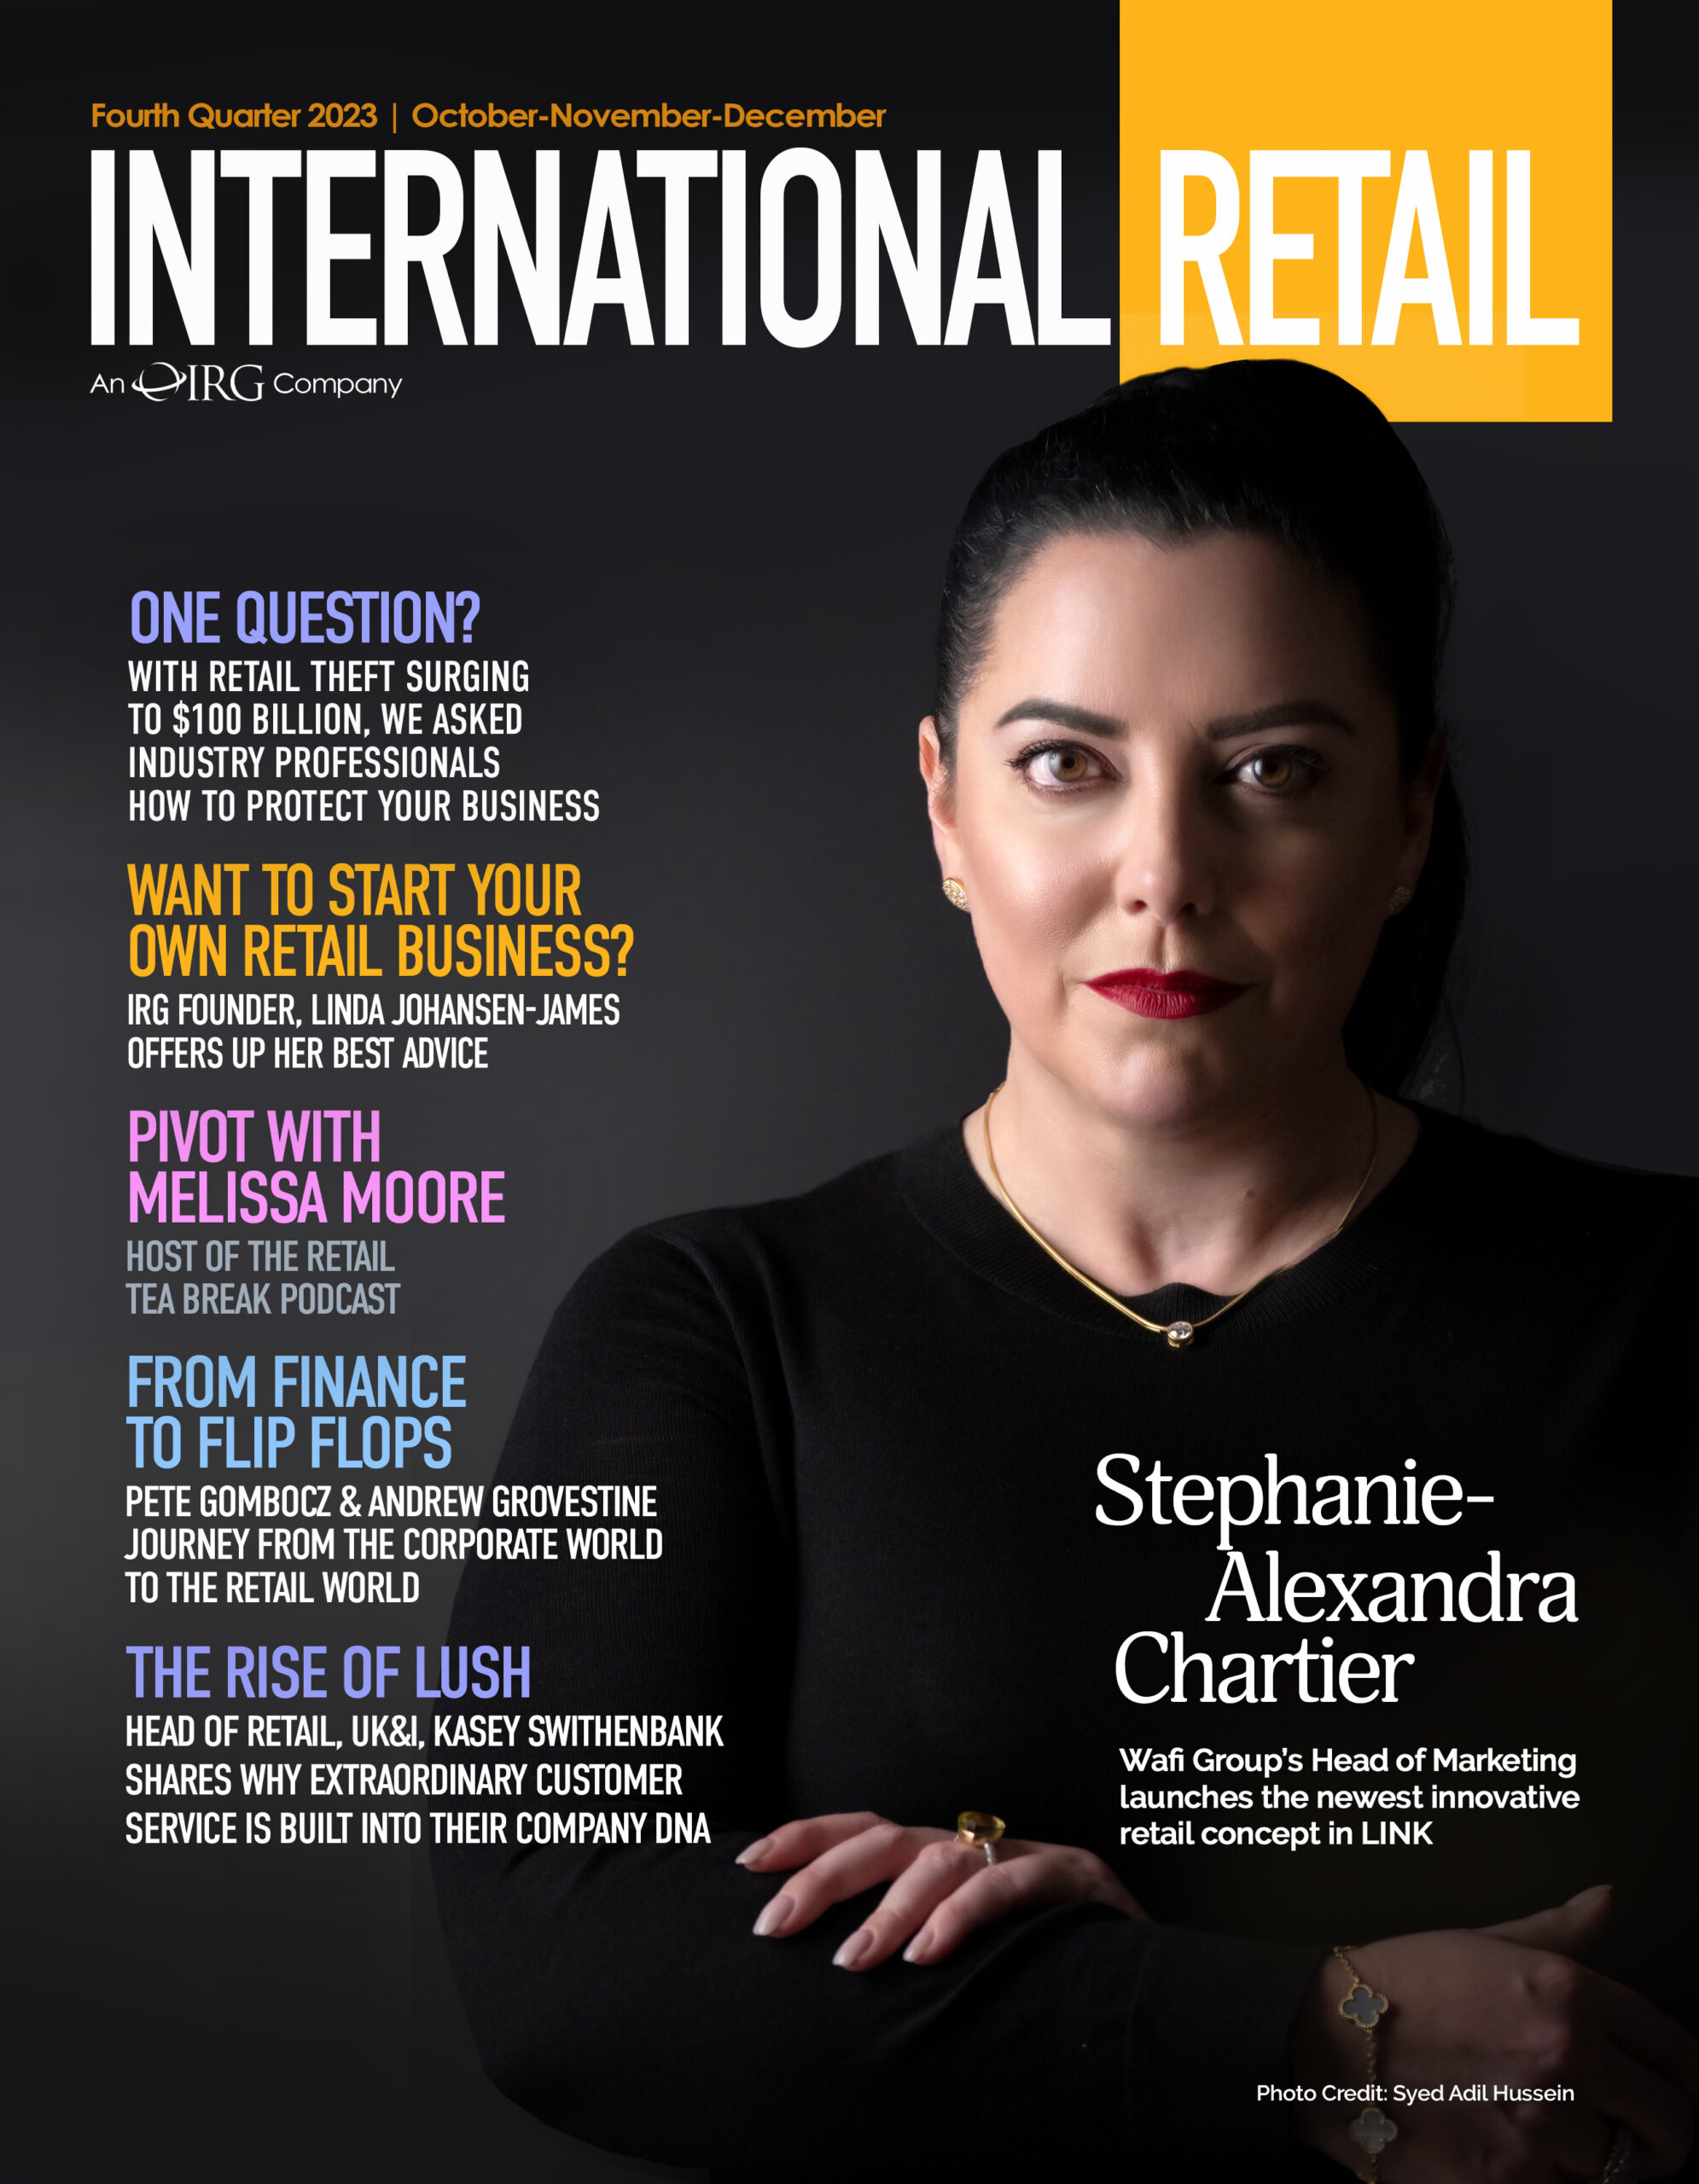 Fall 2023 edition of International Retail Magazine: Stephanie-Alexandra Chartier on the cover.